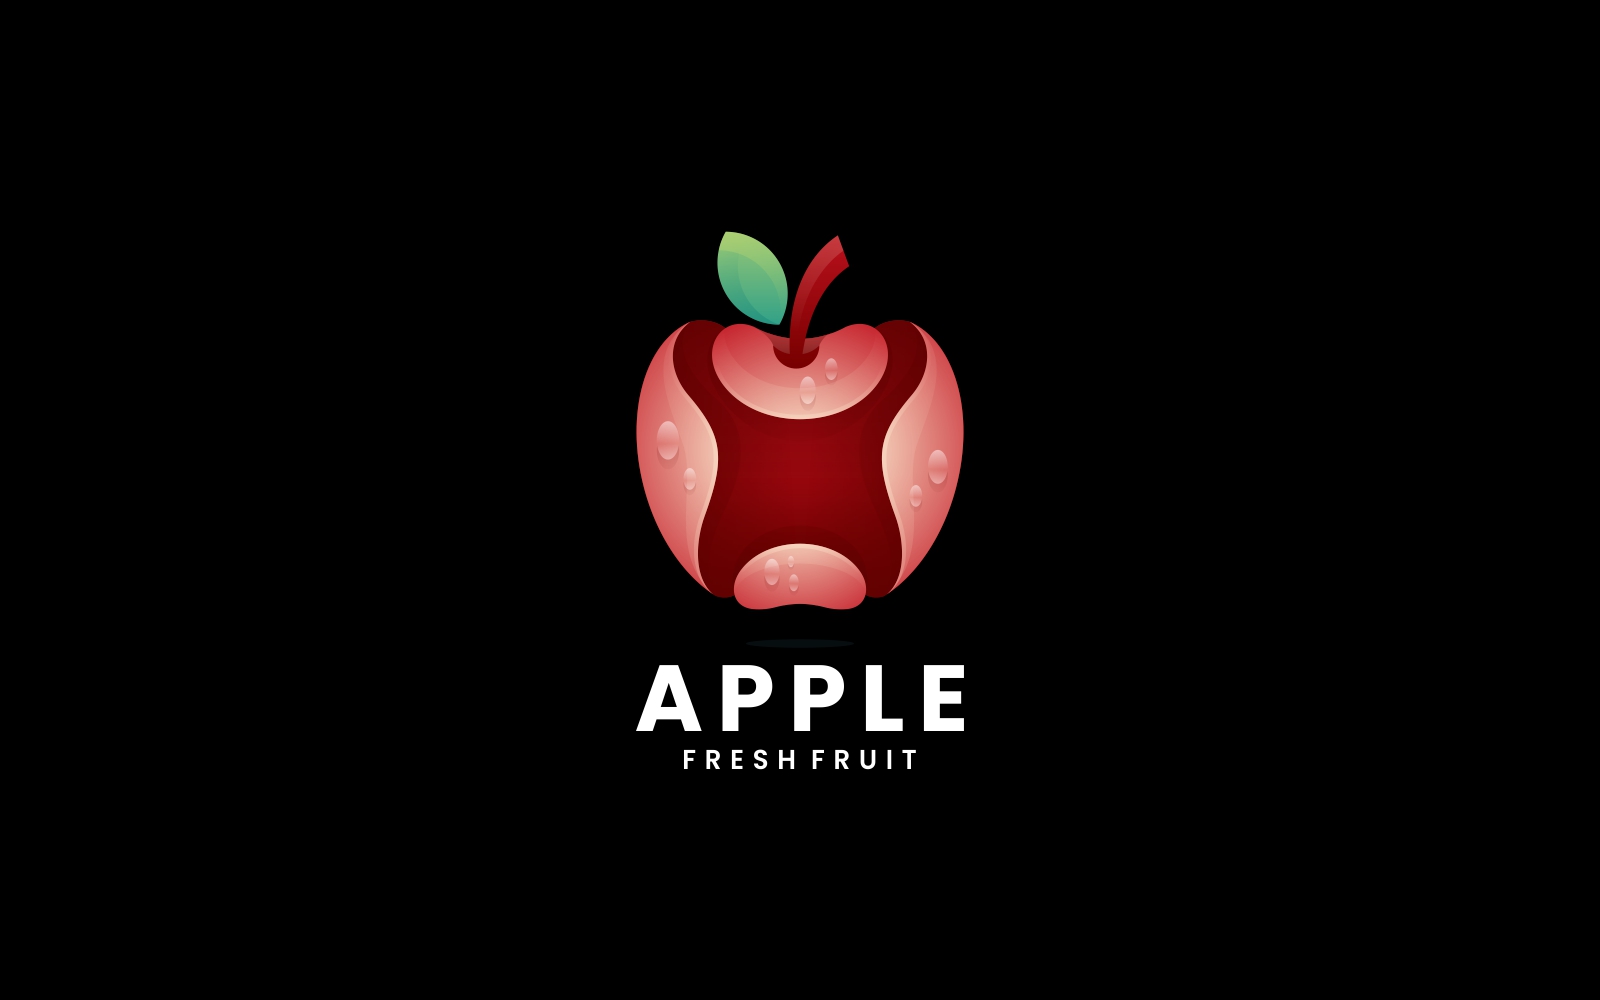 Apple Color Gradient Logo